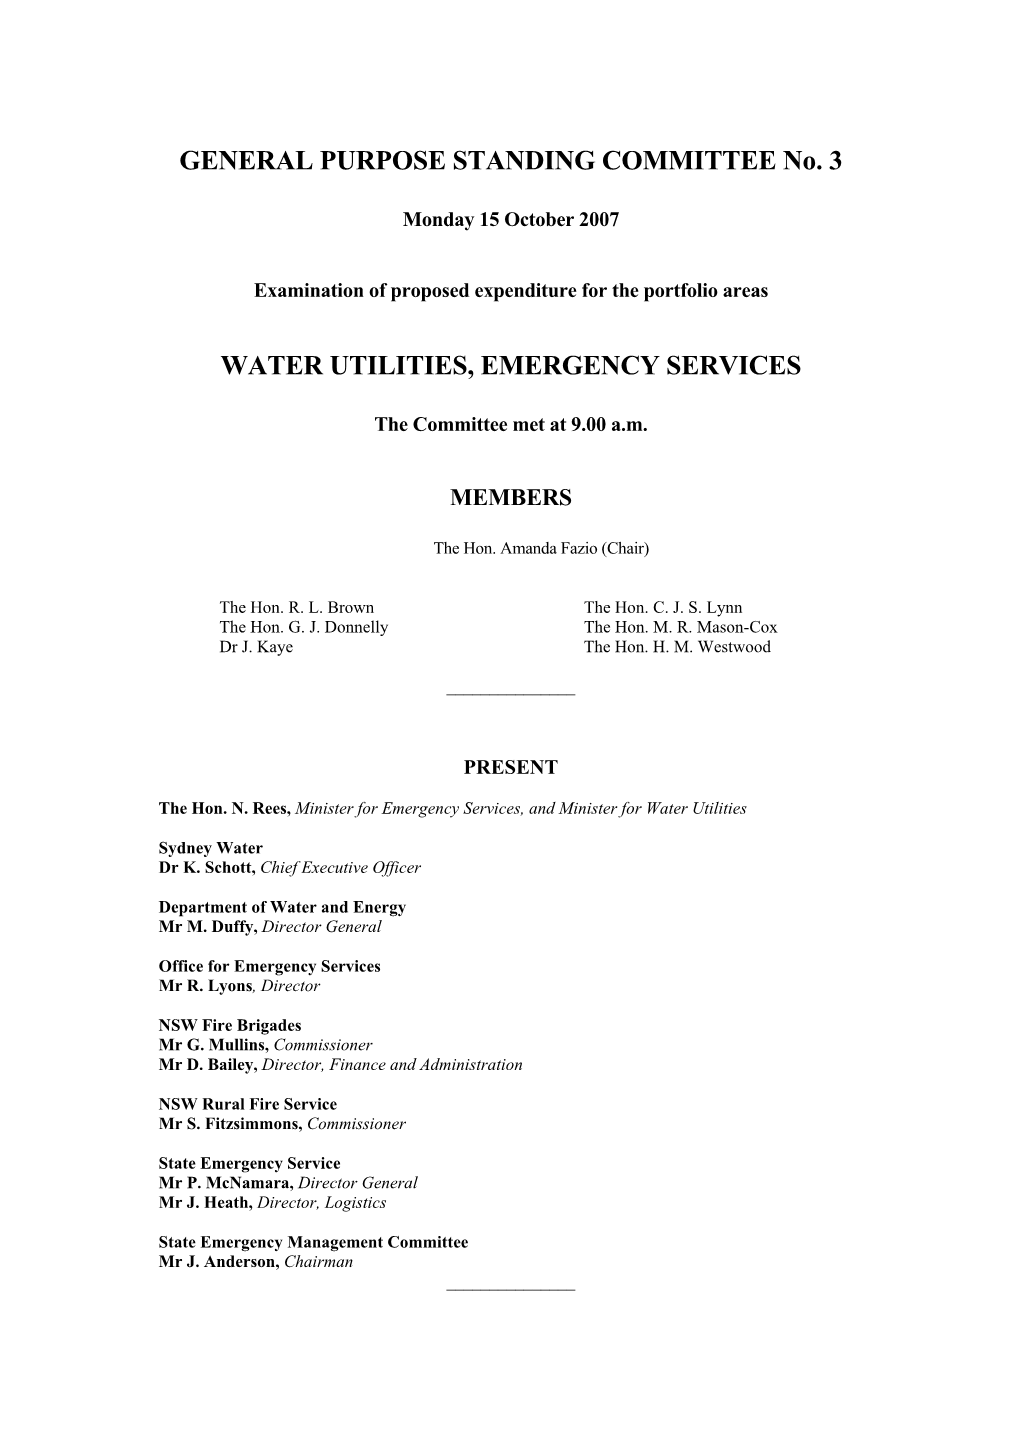 Water Utilities, Emergency Services